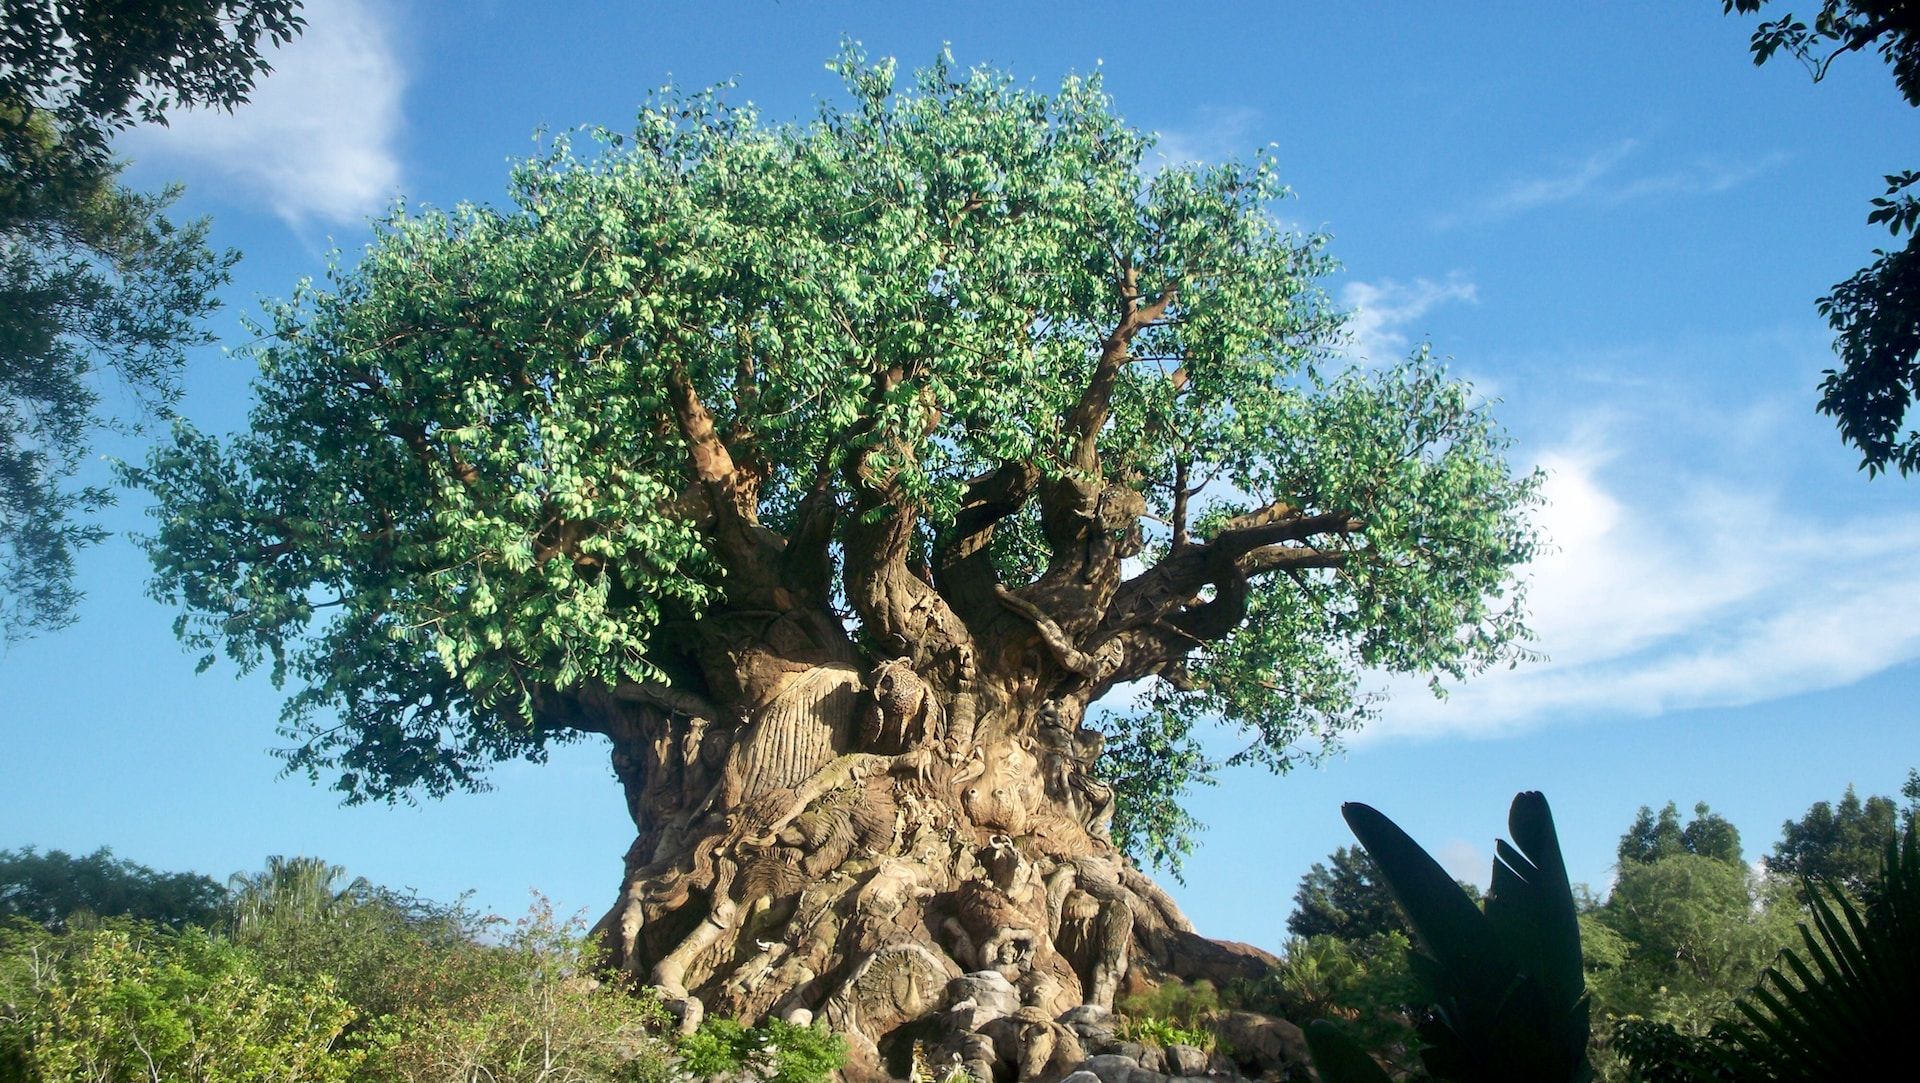 Centerpiece Carved Tree at Animal Kingdom, Walt Disney World Resort, Bay Lake, FL, USA